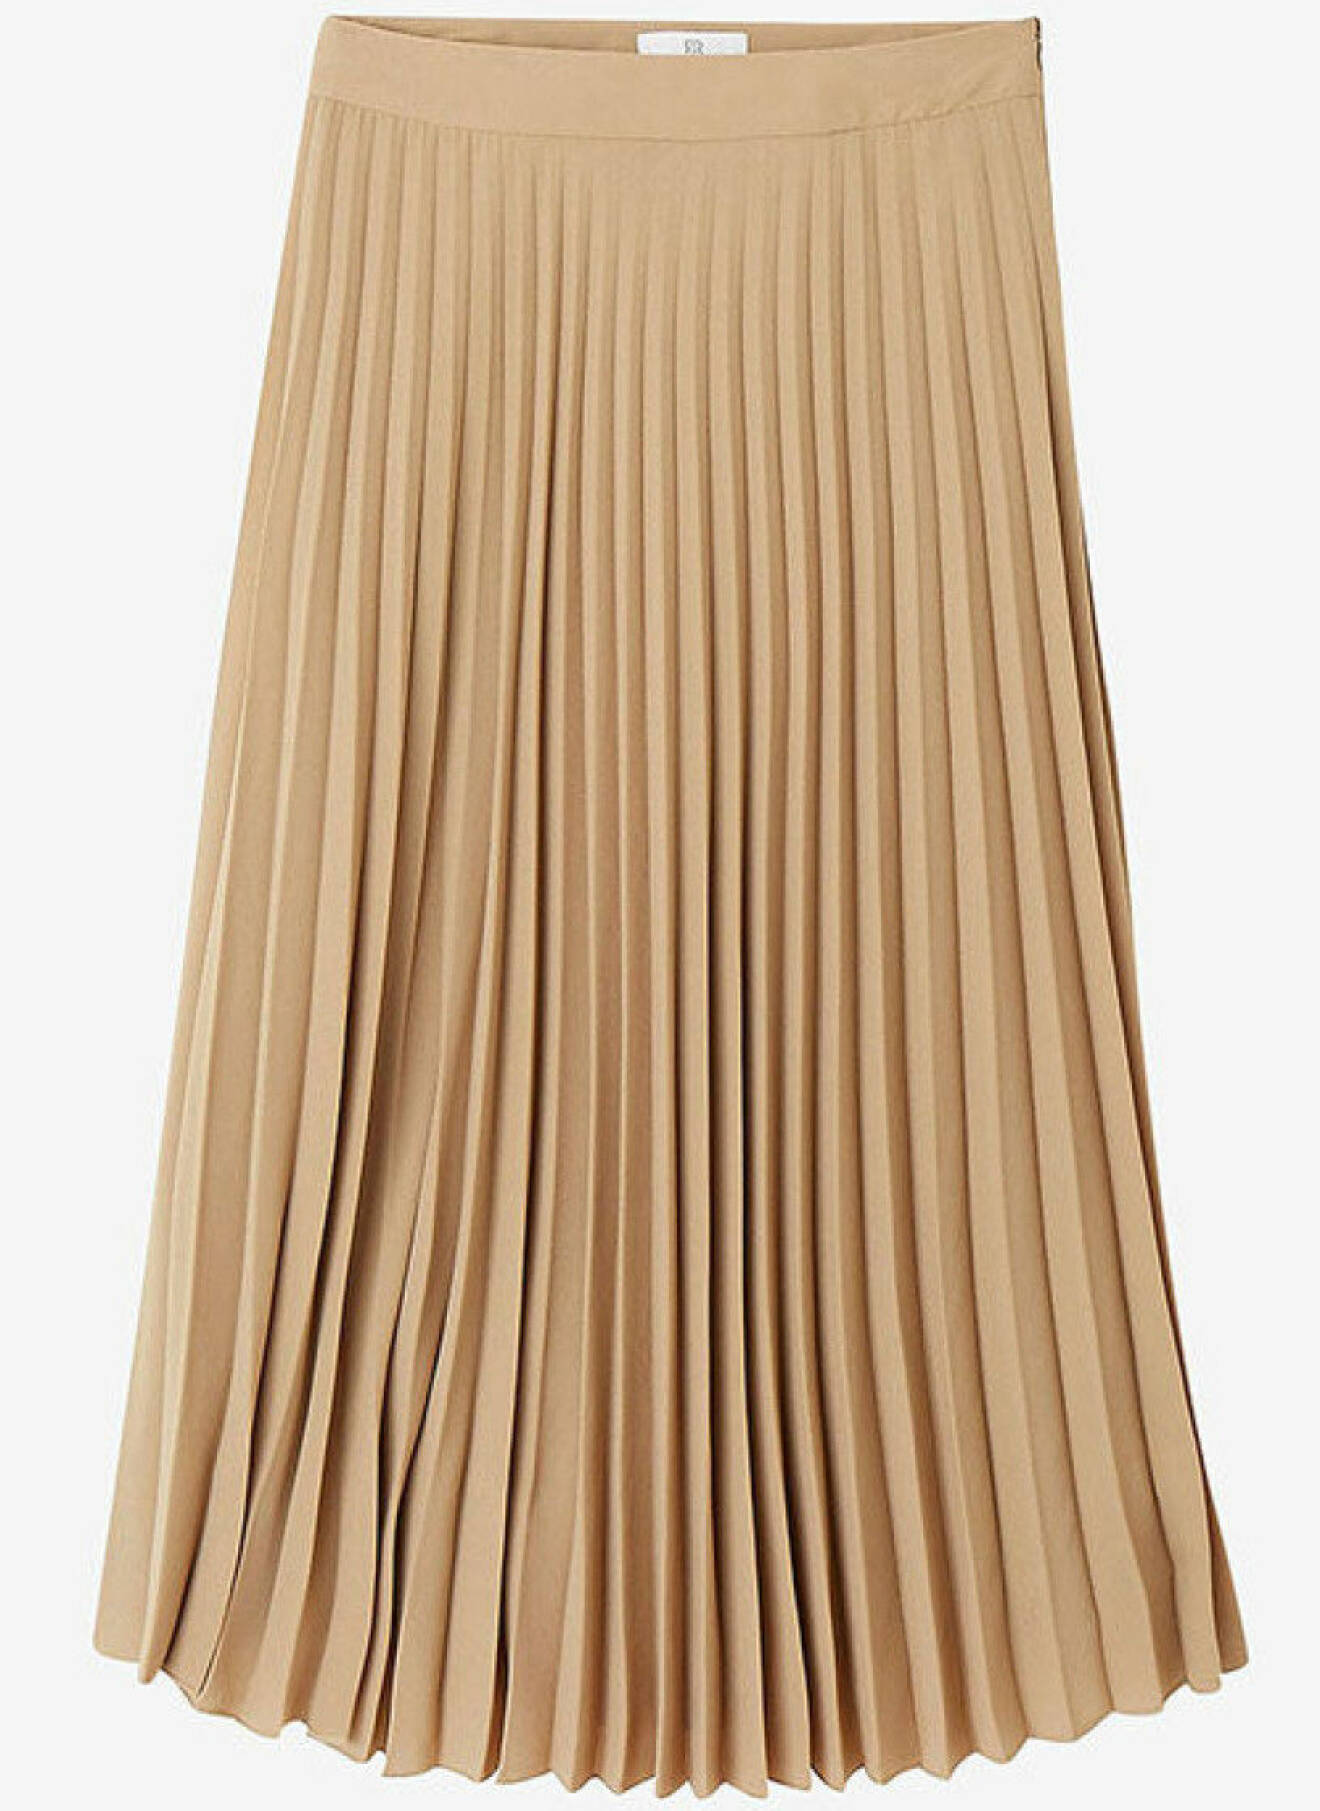 Beige plisserad kjol från La Redoute Collection.